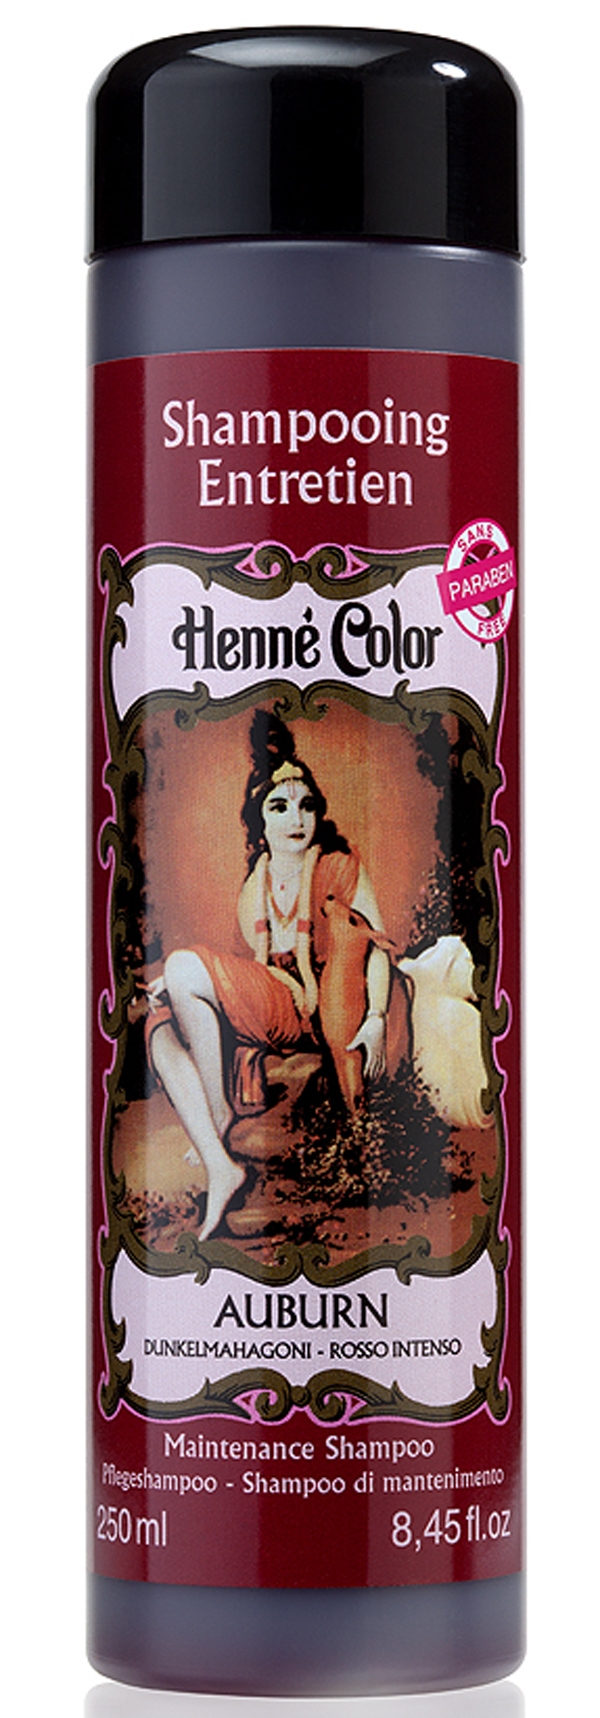 Pack de 3 champús de mantenimiento Henna Color castaño 250ml